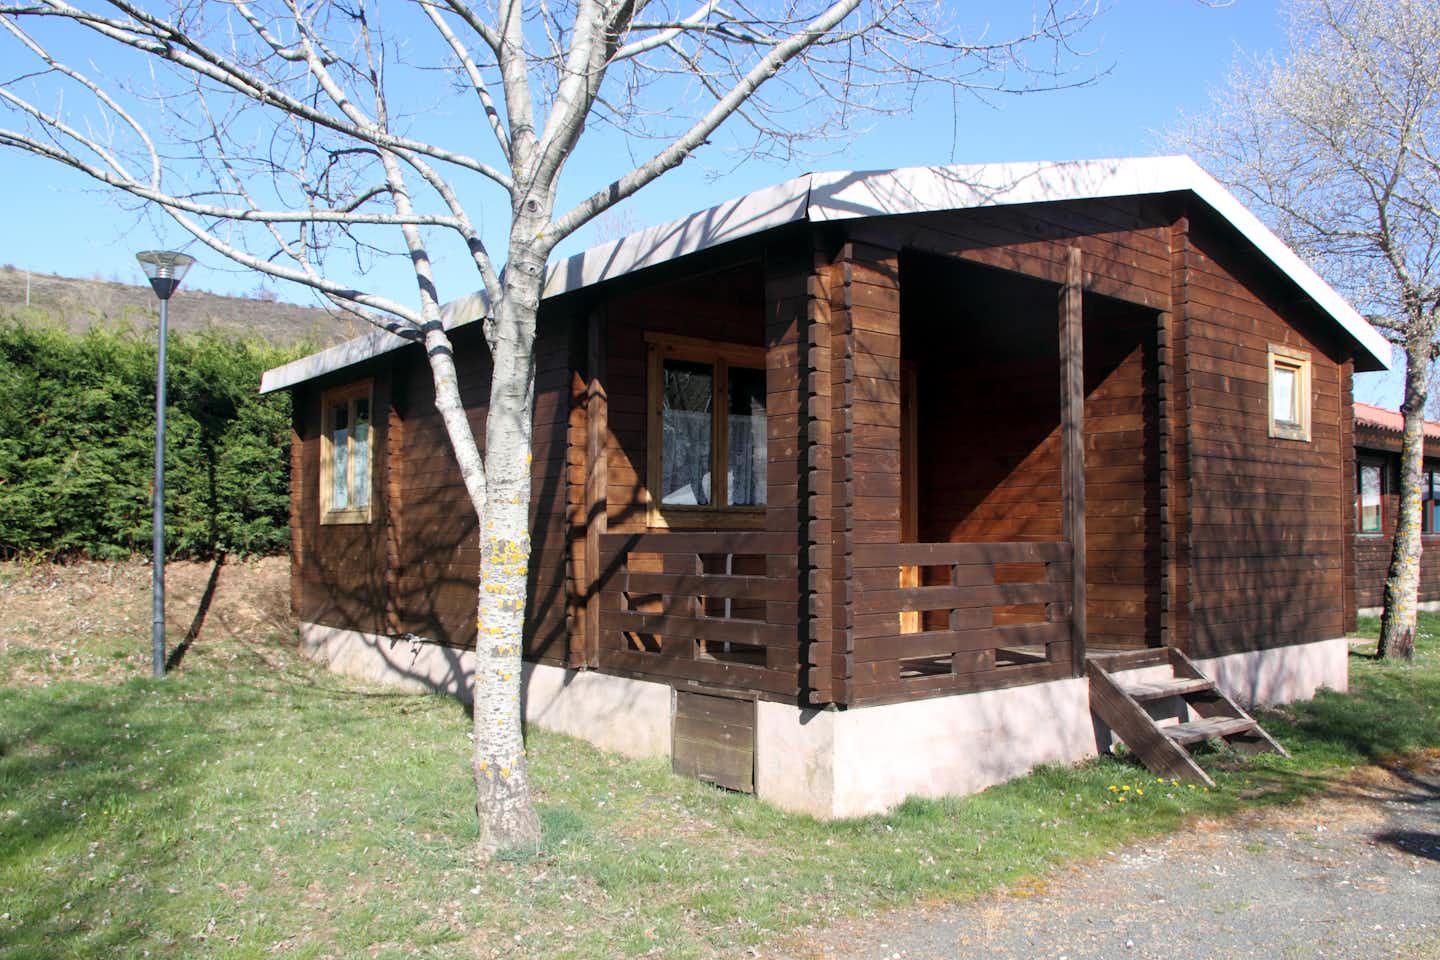 Camping Puerta de la Demanda - Holz Bungalow mit überdachter Veranda auf dem Campingplatz